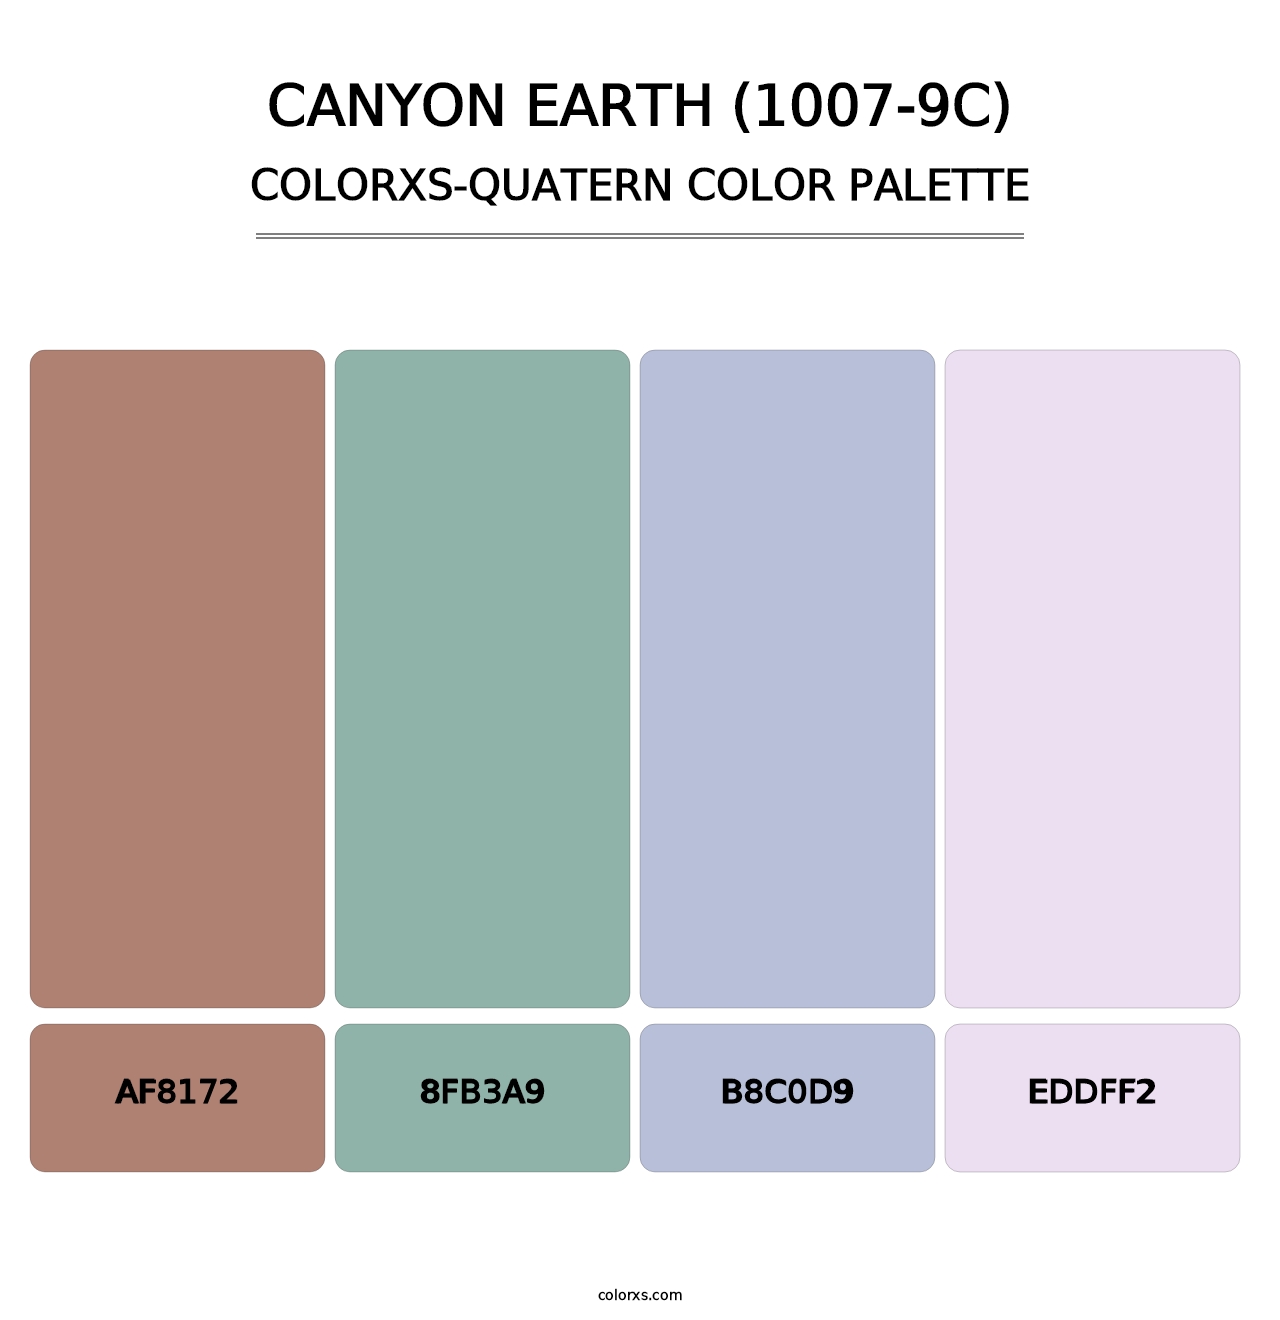 Canyon Earth (1007-9C) - Colorxs Quatern Palette